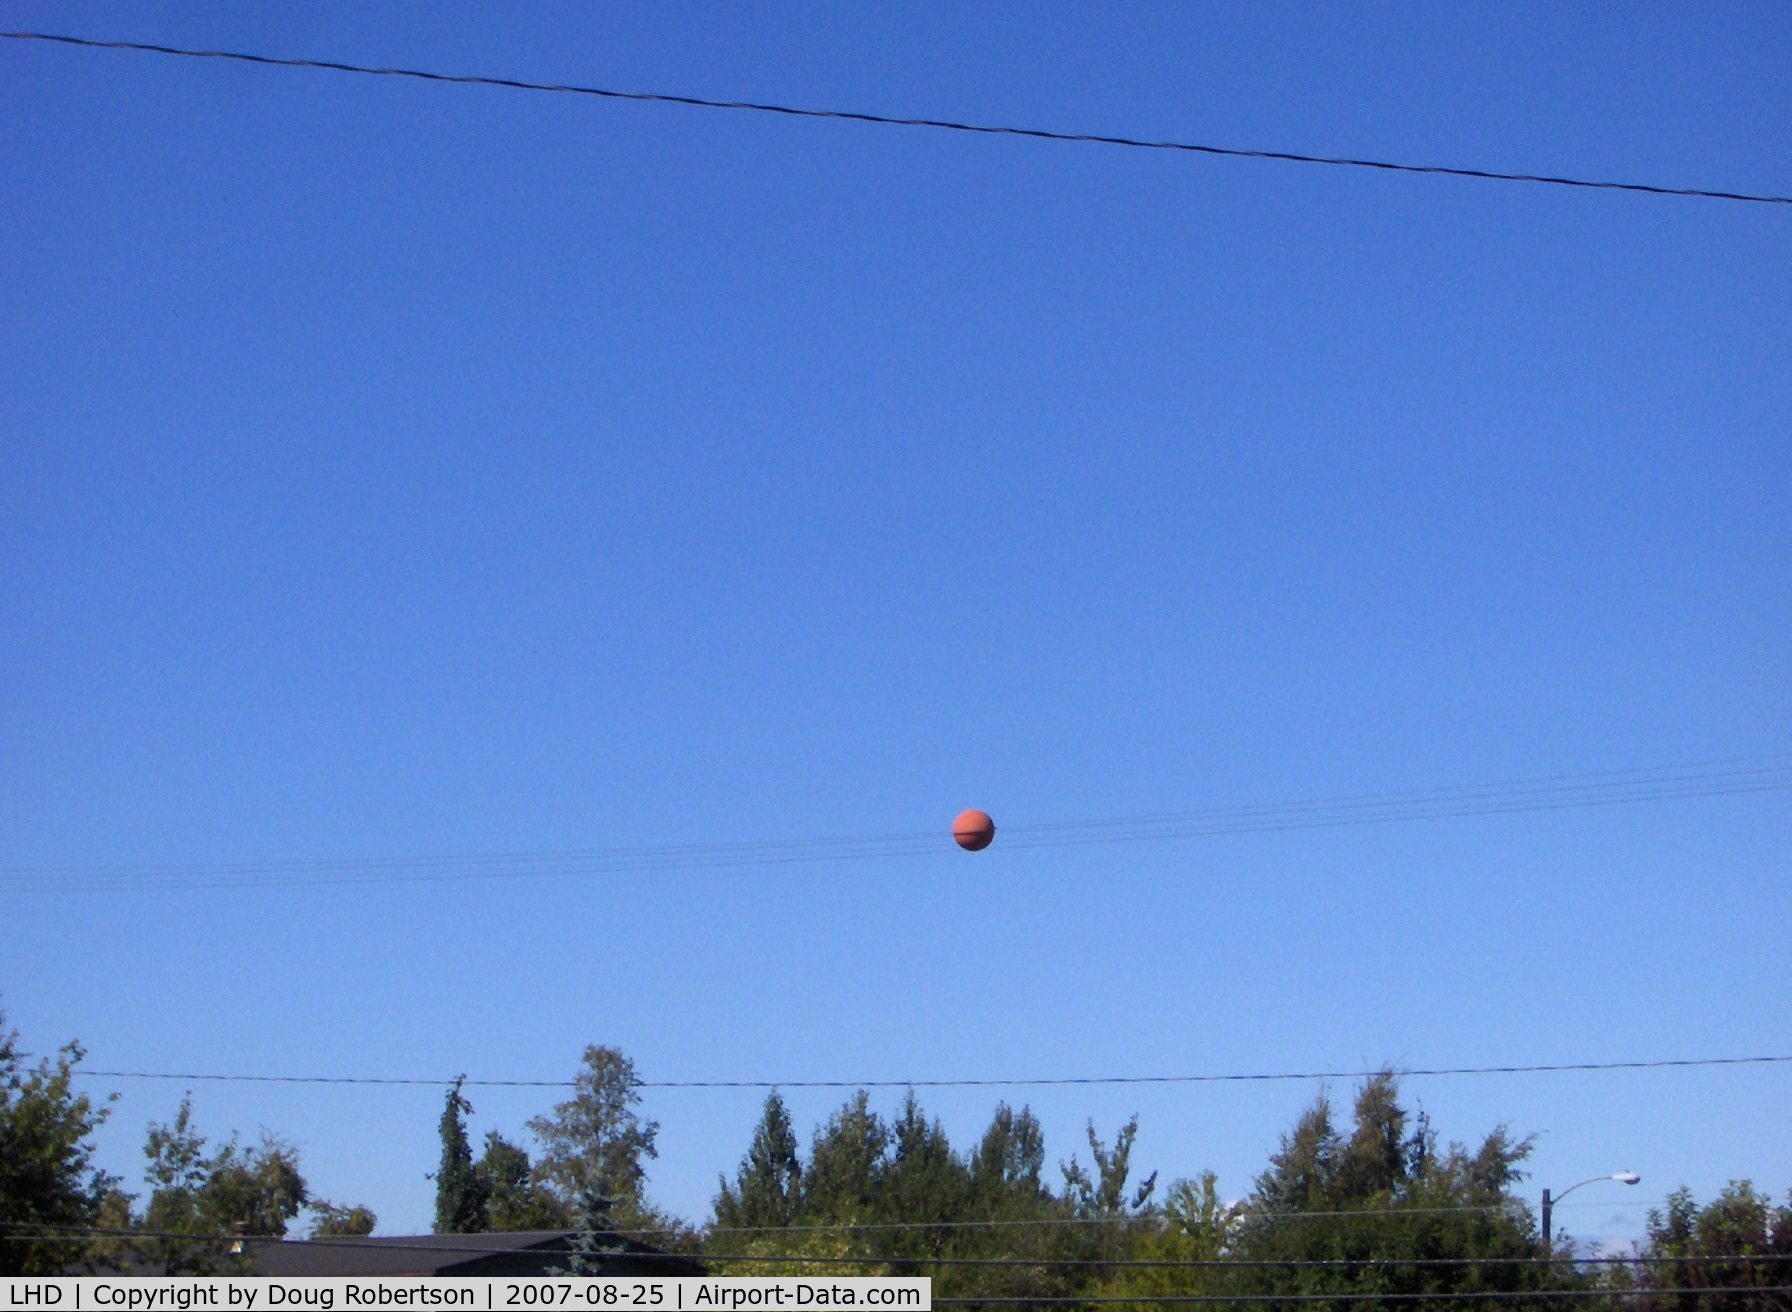 Lake Hood Seaplane Base (LHD) - Orange balls mark low wires on approach to water landing